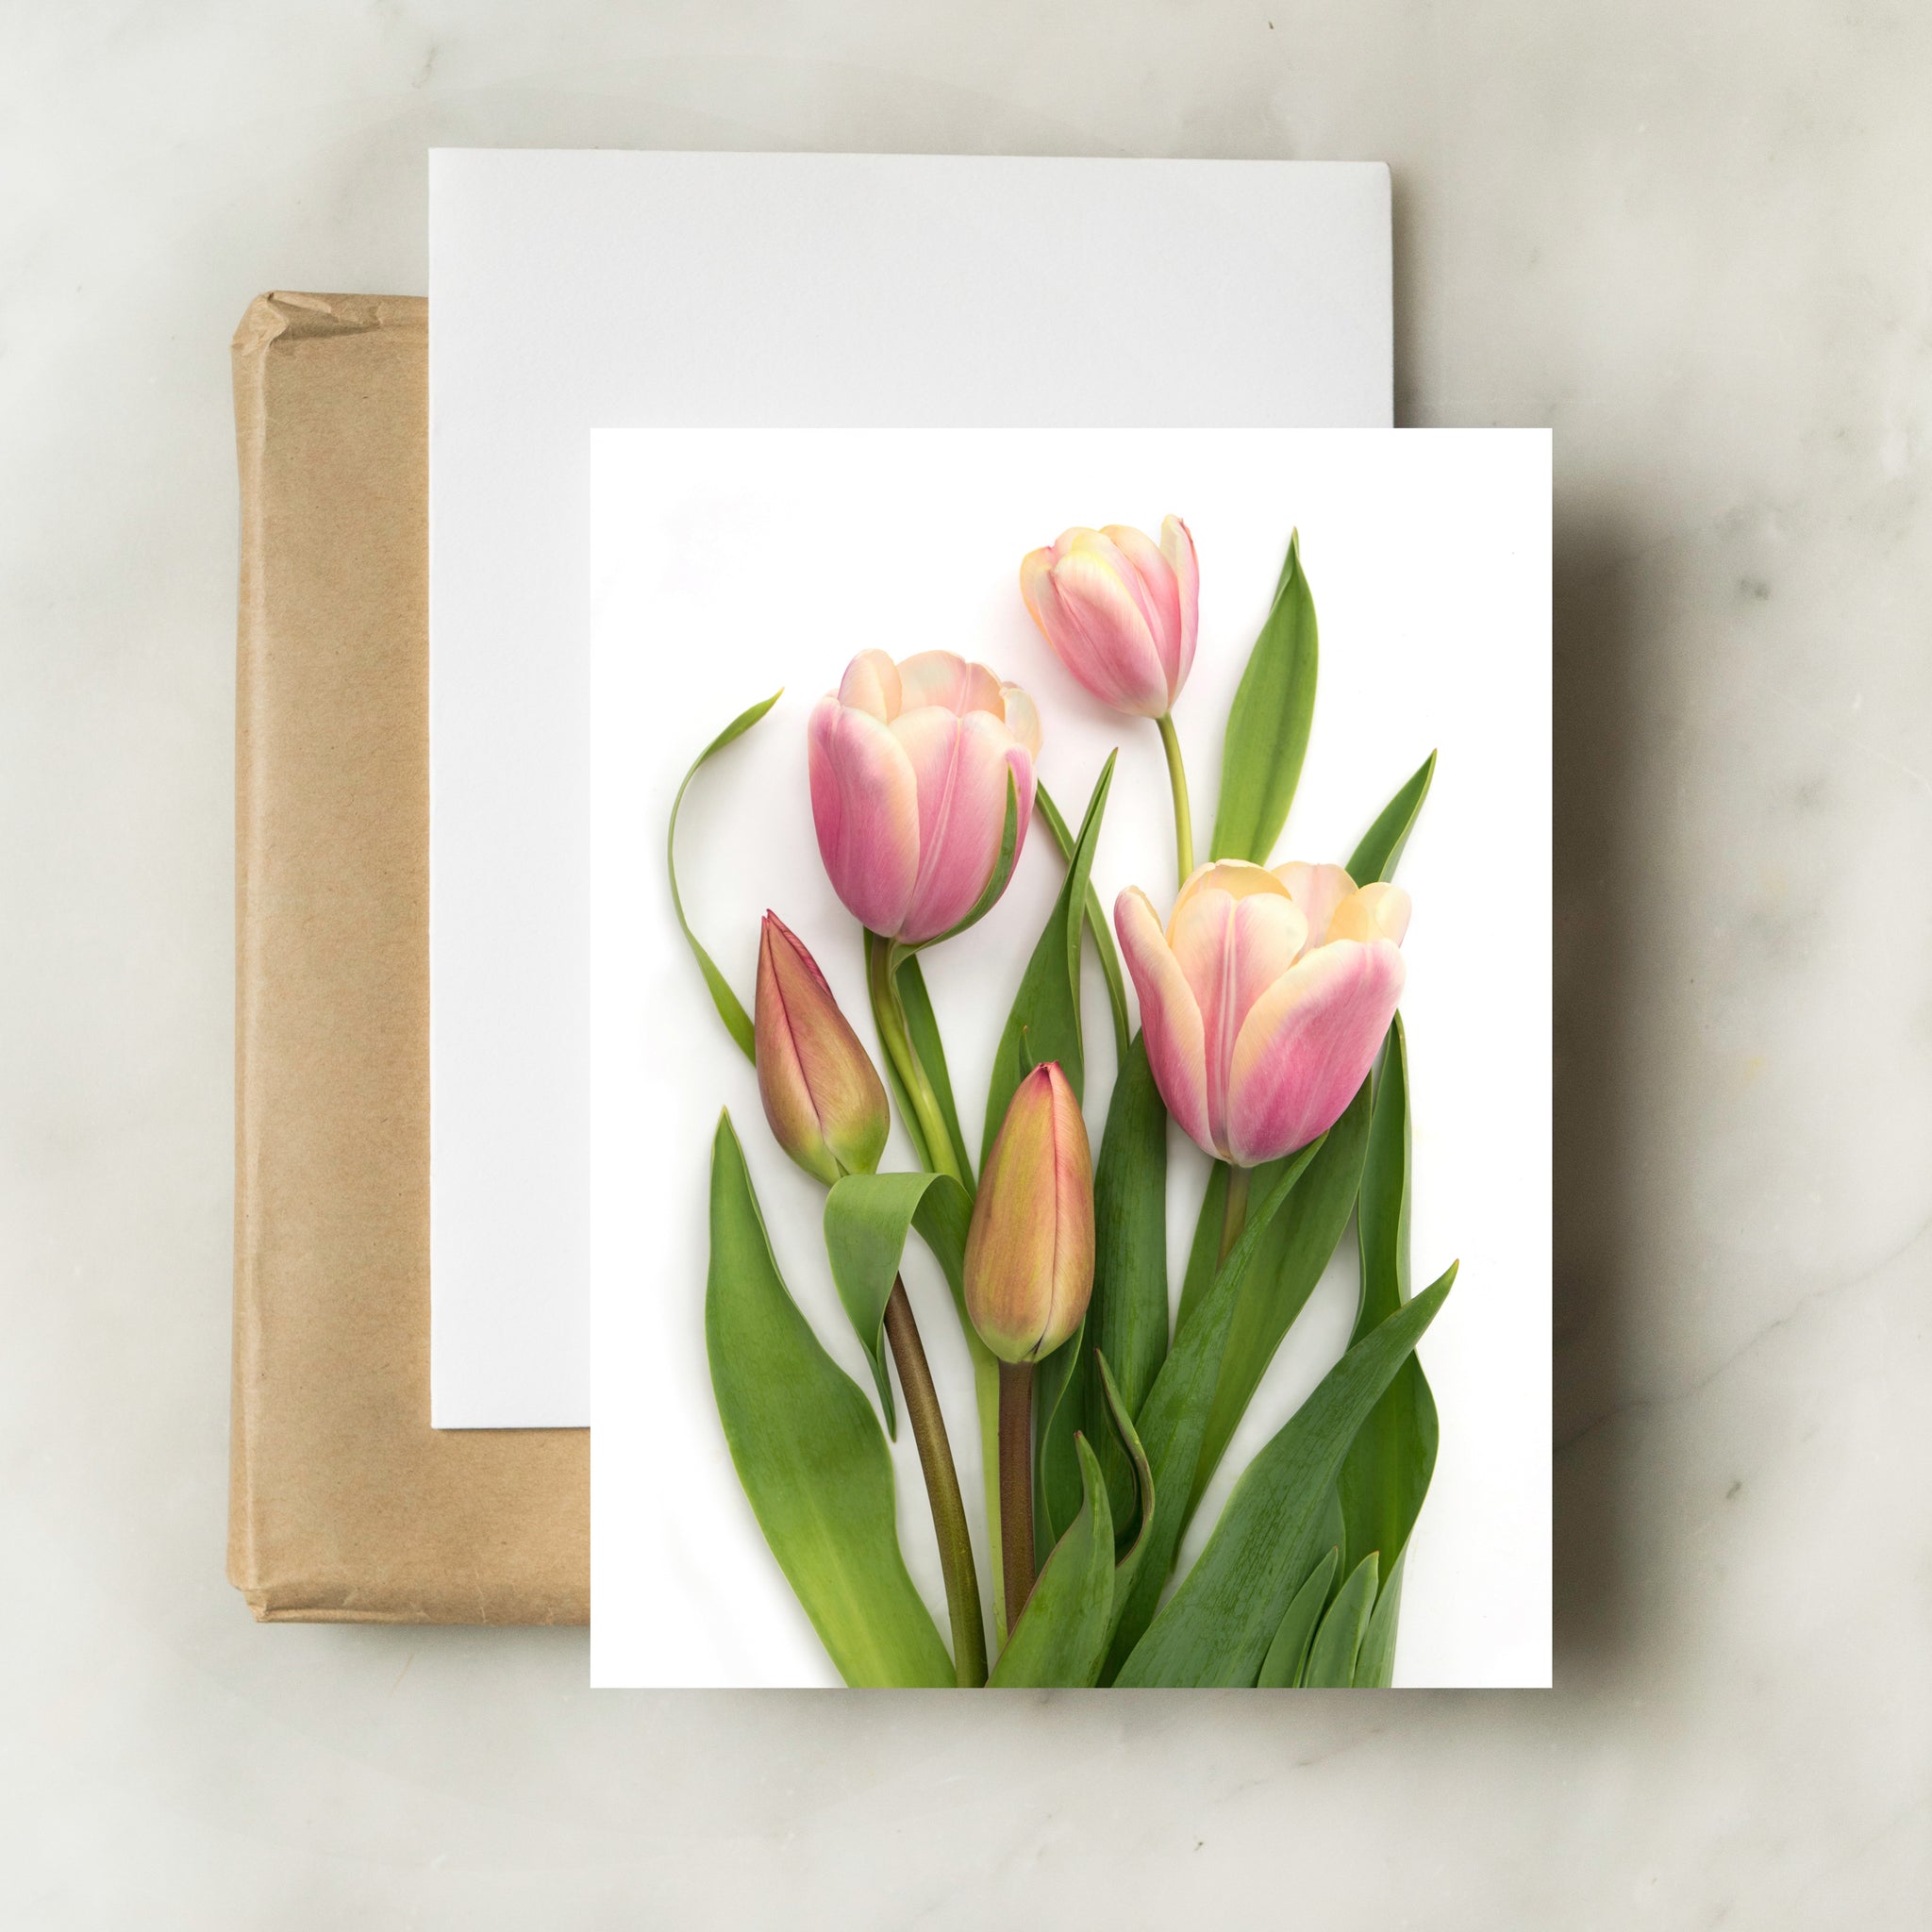 Folding card - Pink tulips card